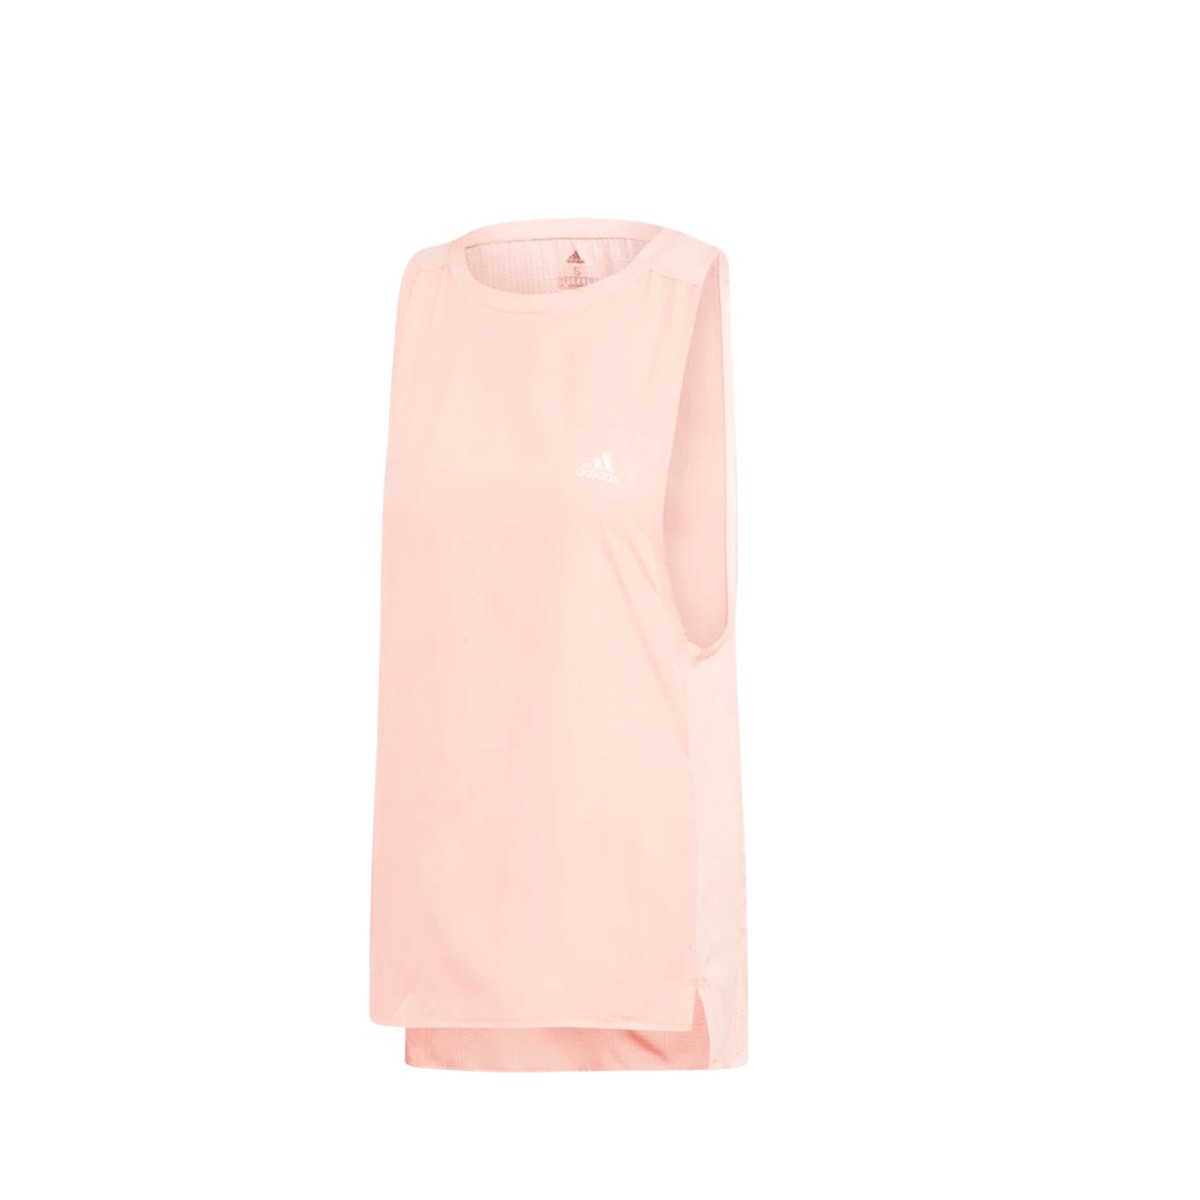 Adidas Running T-shirt 25/7 Tank Pink Woman, Size L